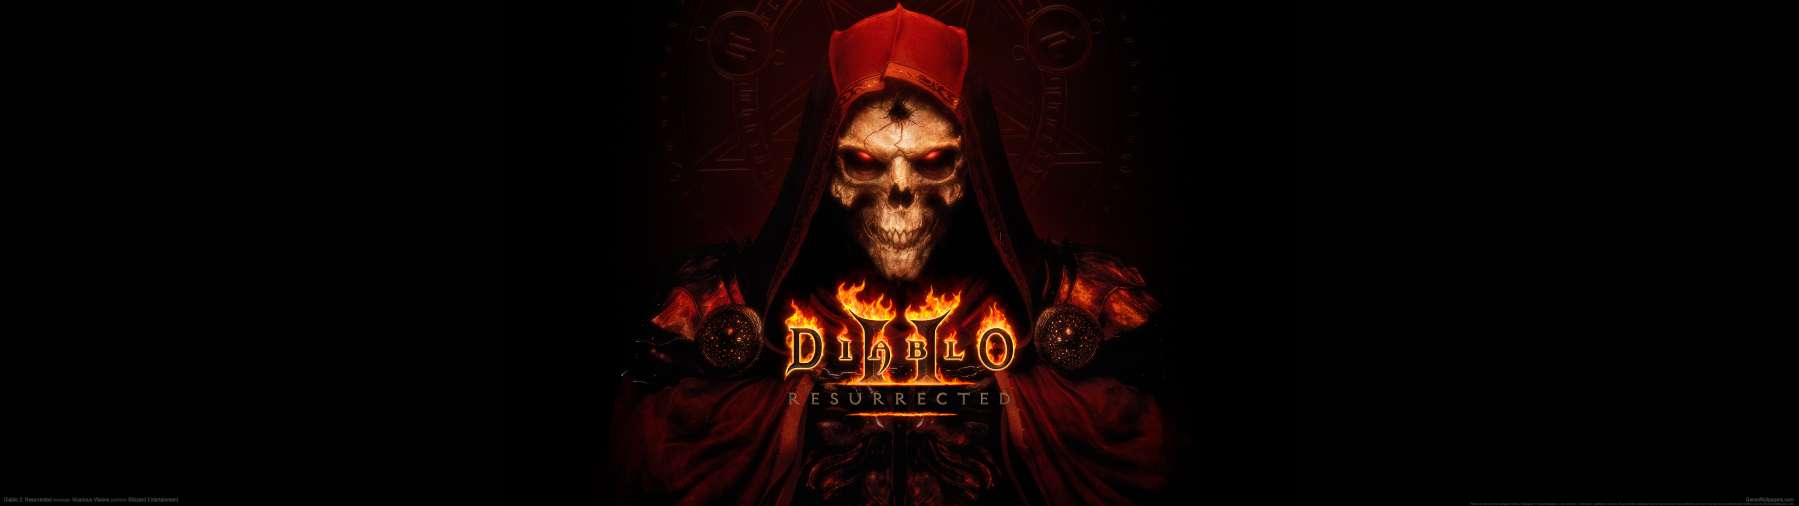 Diablo 2: Resurrected superwide wallpaper or background 01